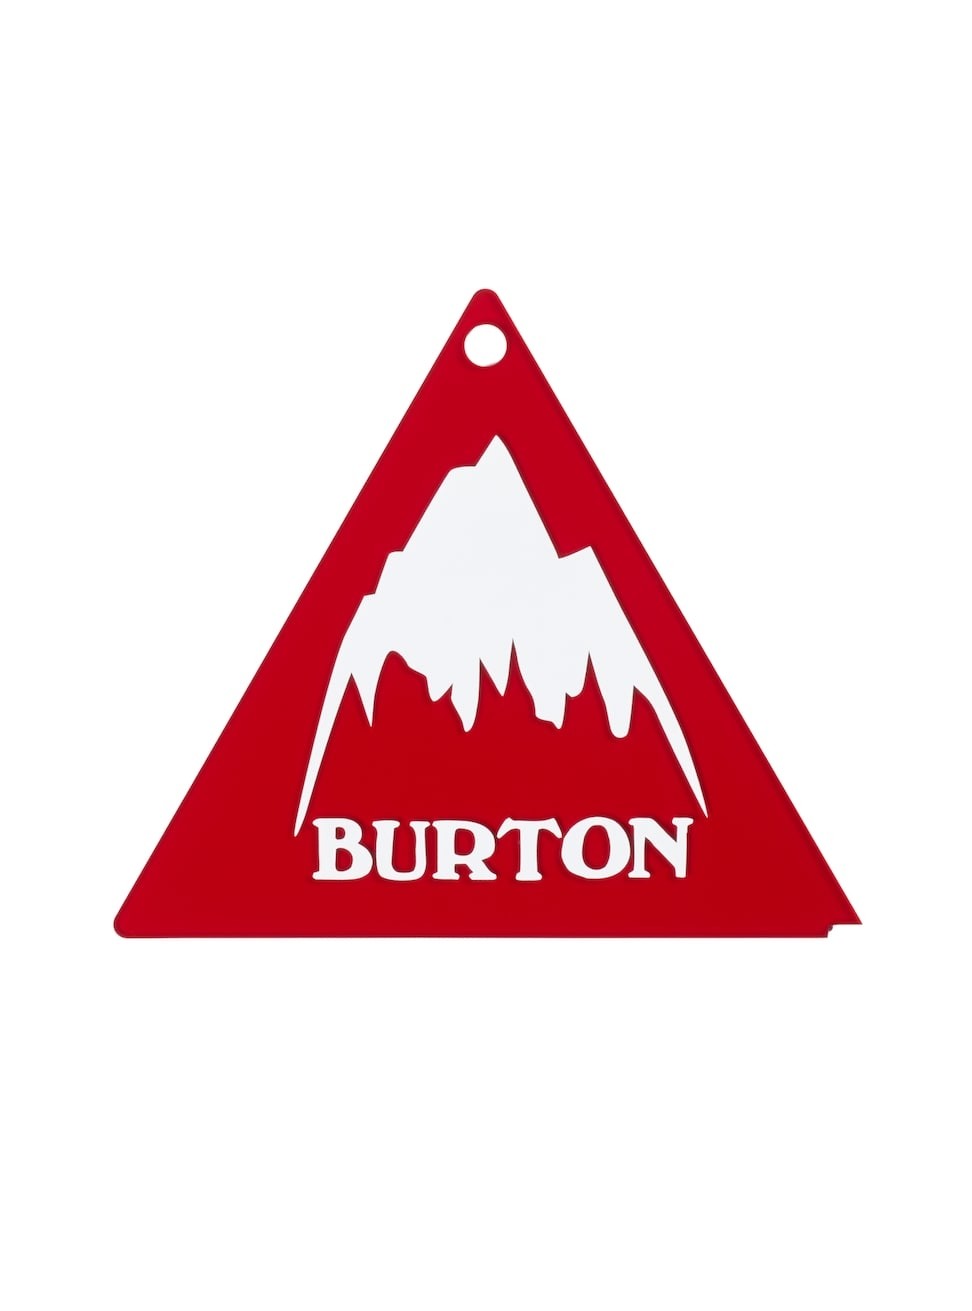 Burton Tri-scraper waxkrabber